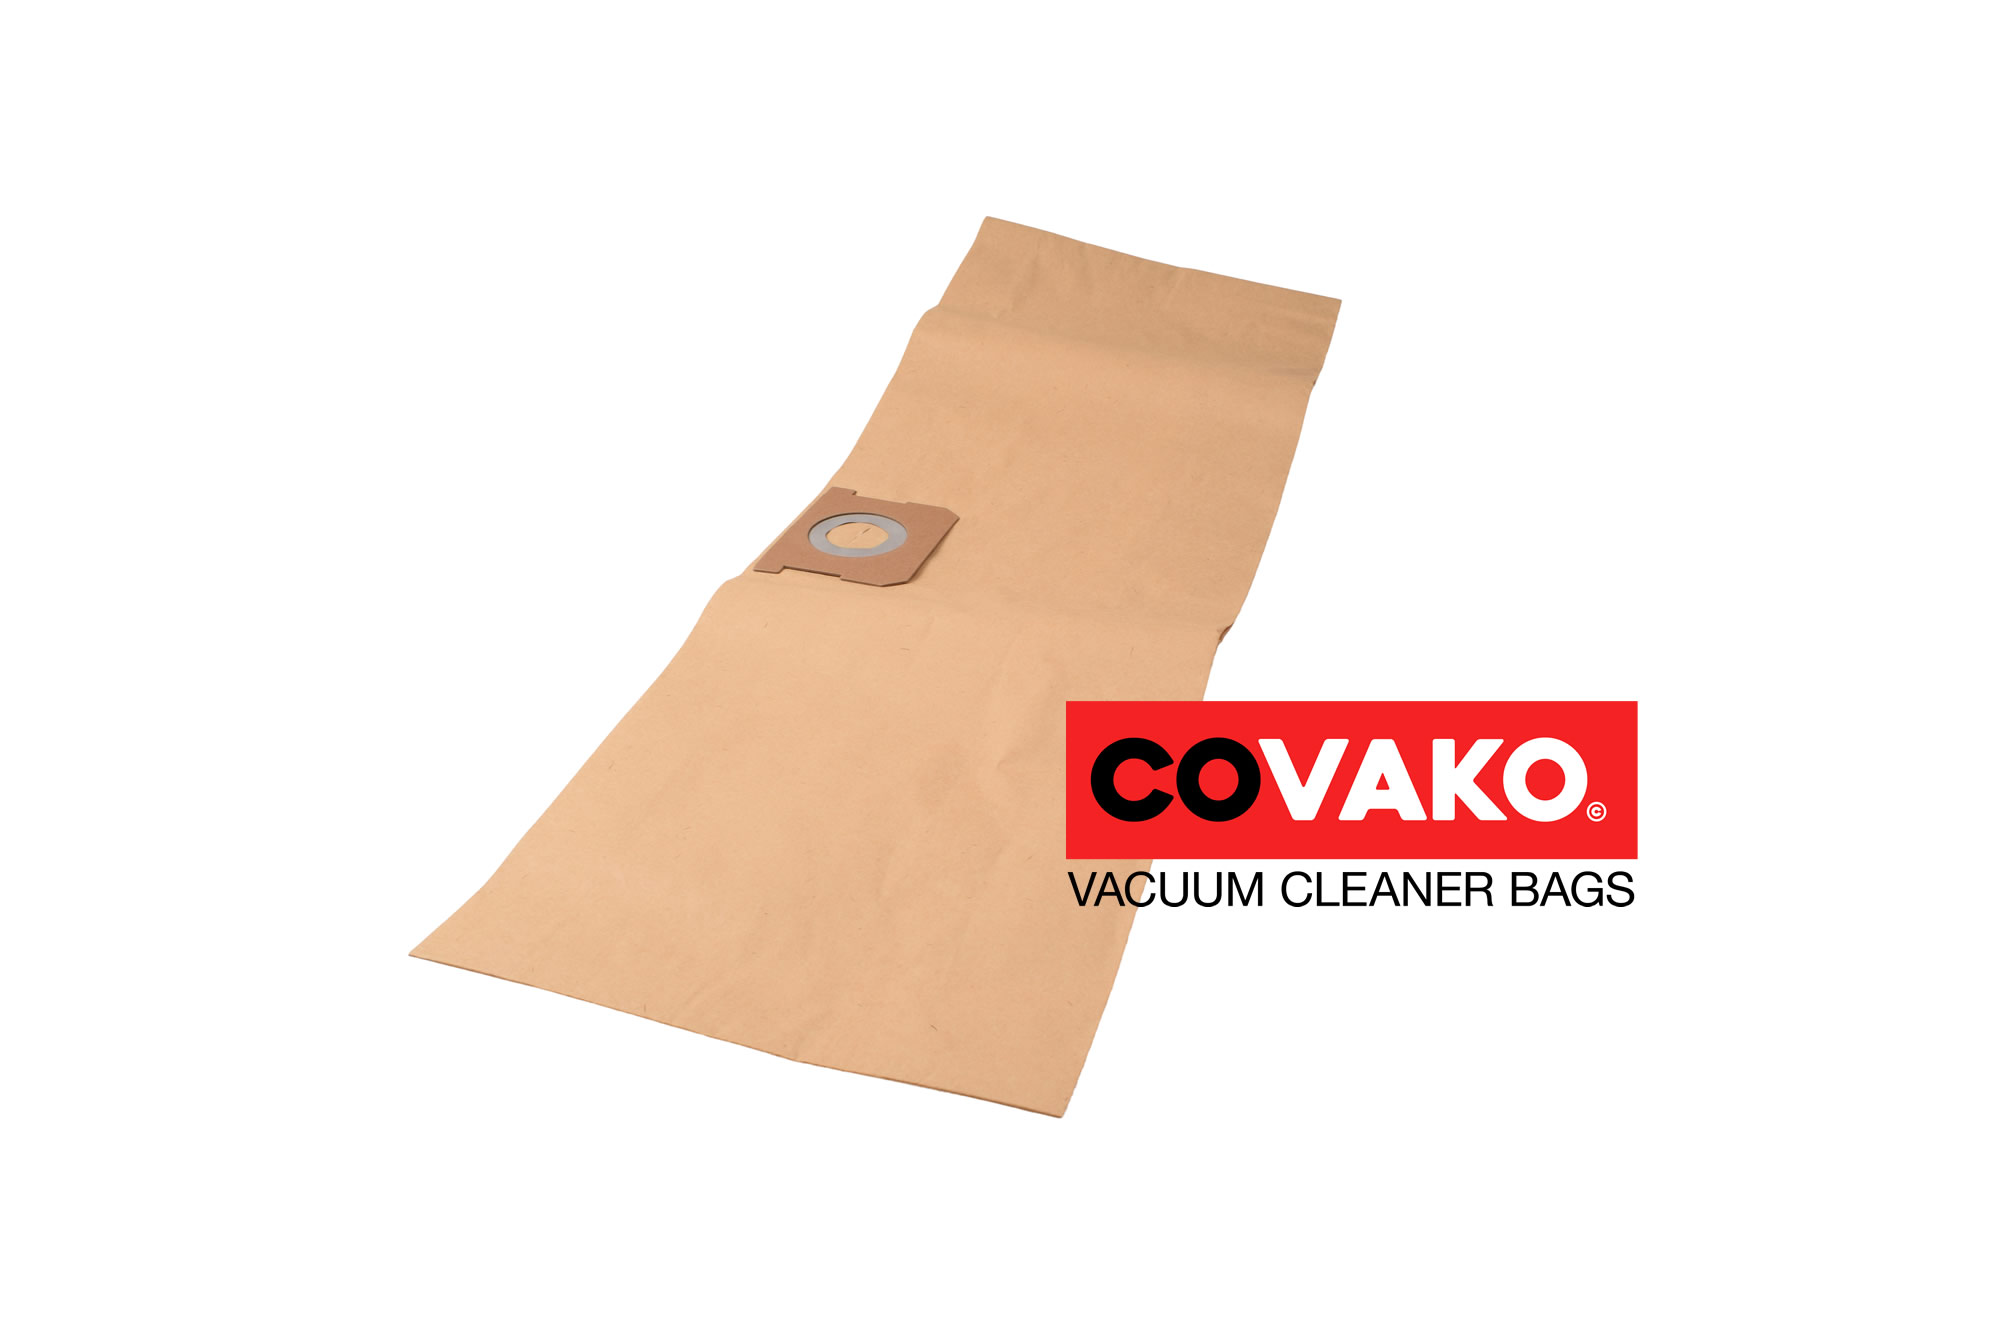 Obi NTS 30/1600 / Paper - Obi vacuum cleaner bags